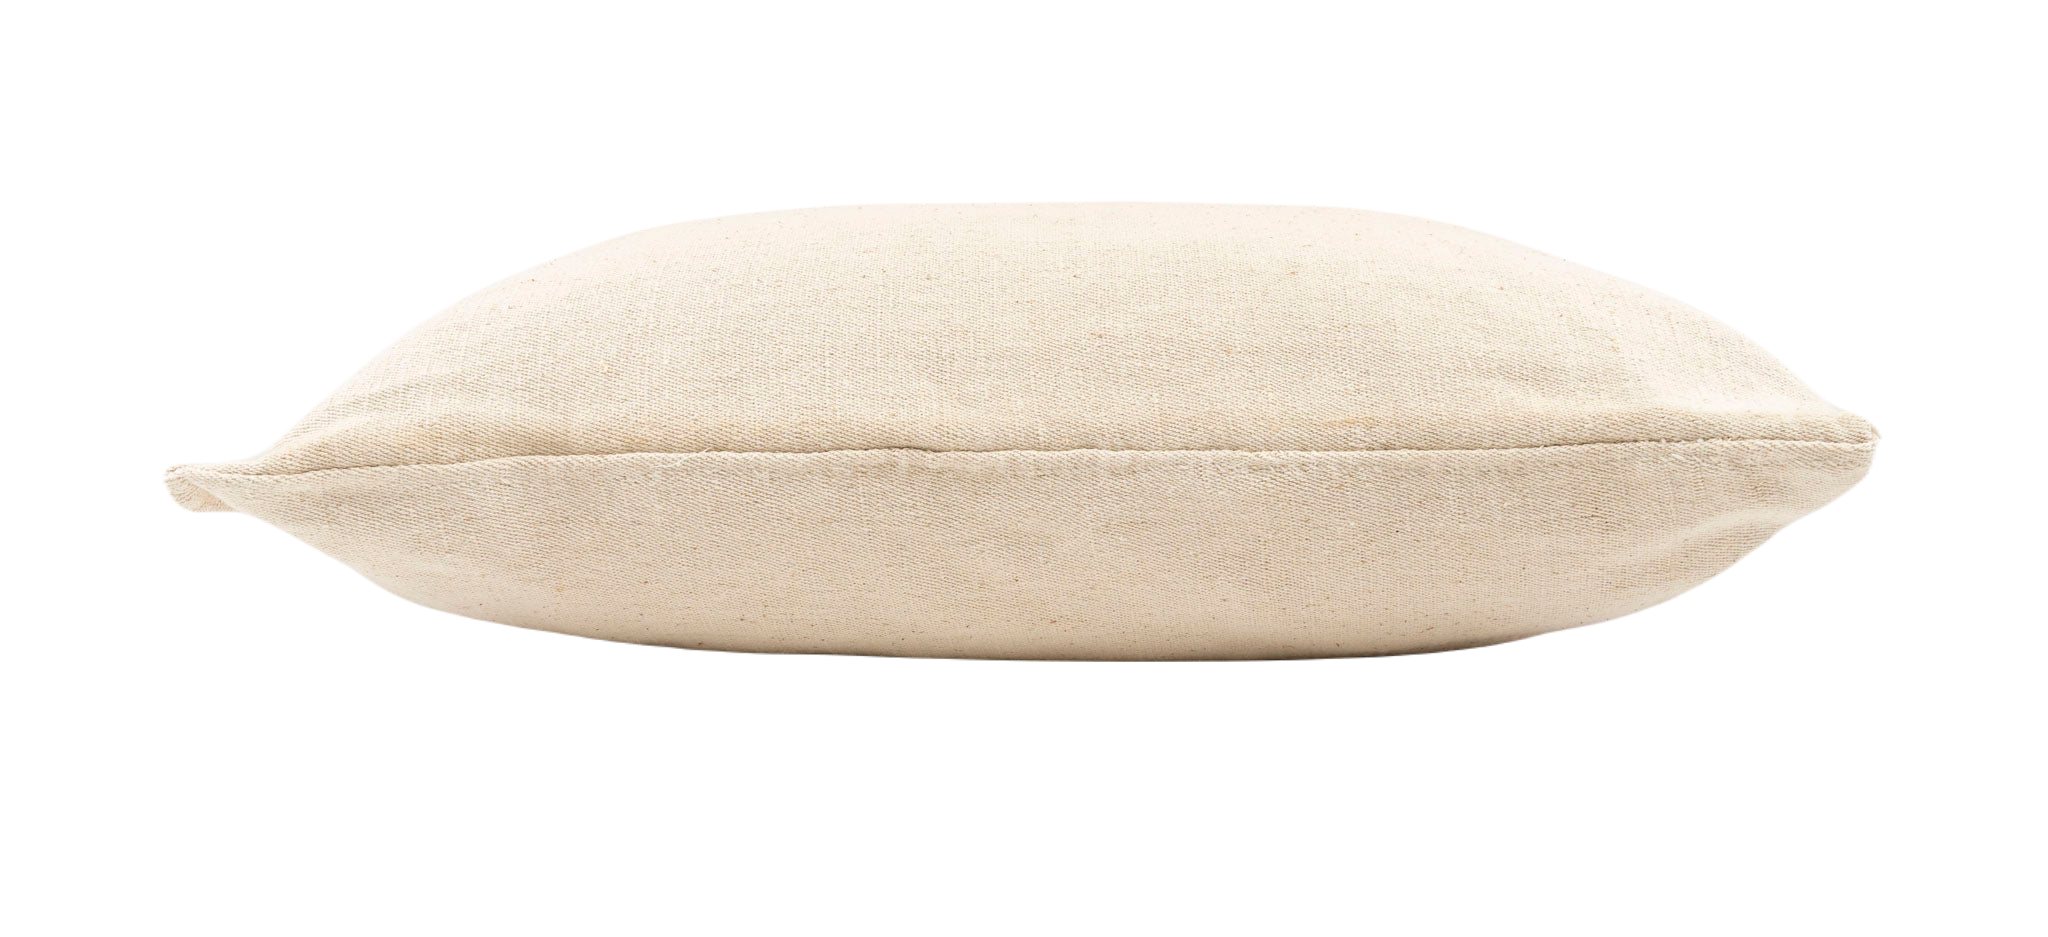 Pillow: Grain sack handwoven Hungarian hemp - P101